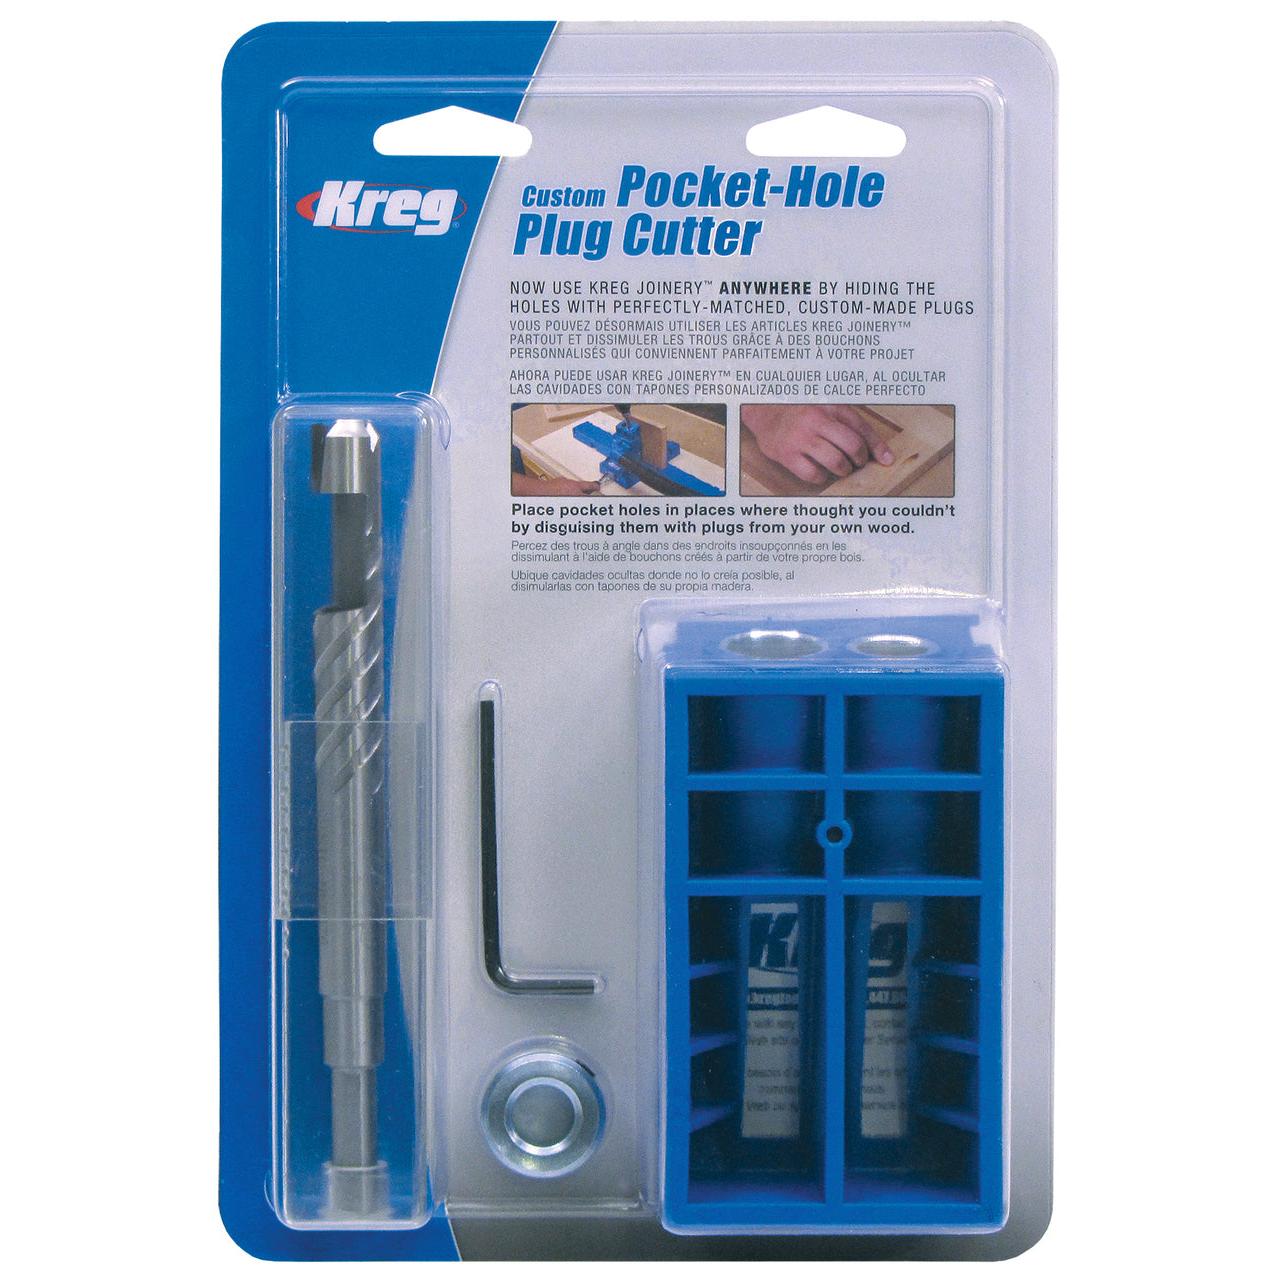 Kreg Custom Pocket-Hole Plug Cutter KPCS Power Tool Services